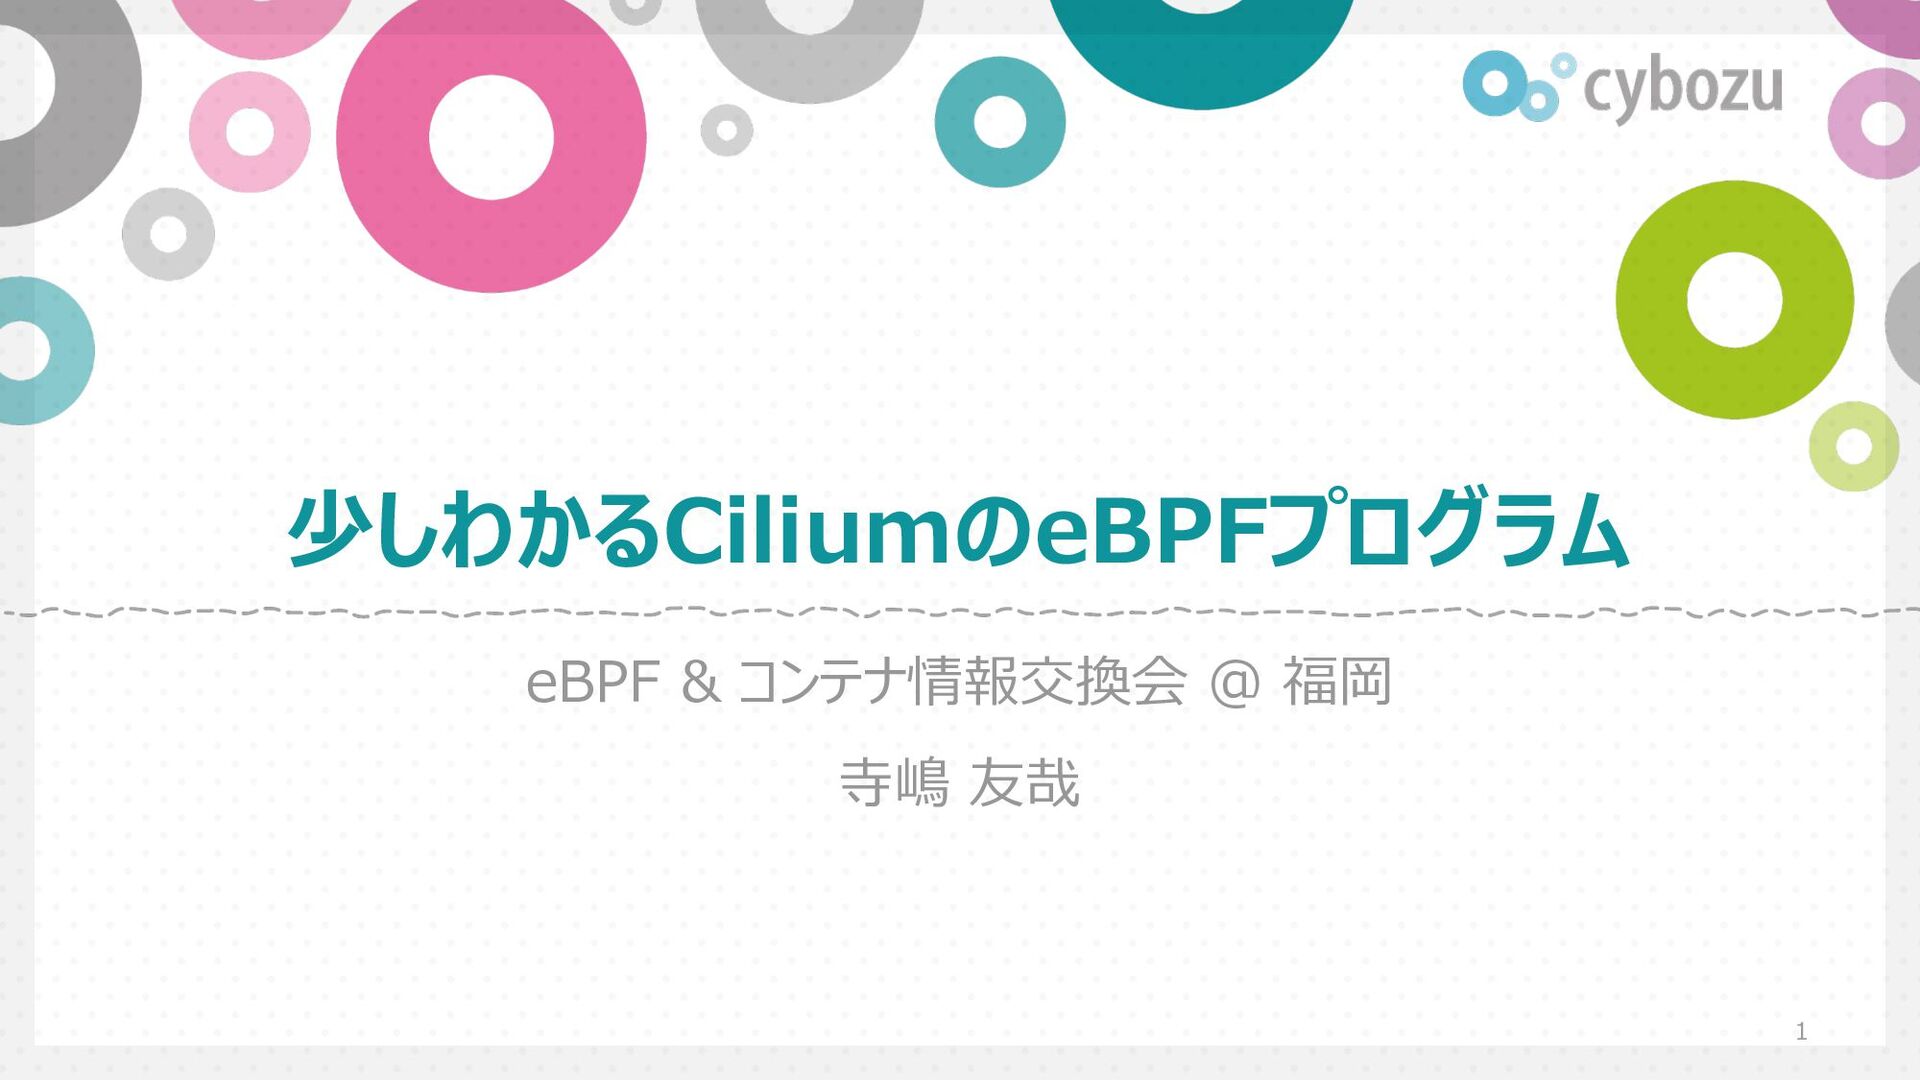 Slide Top: 少しわかるCiliumのeBPFプログラム